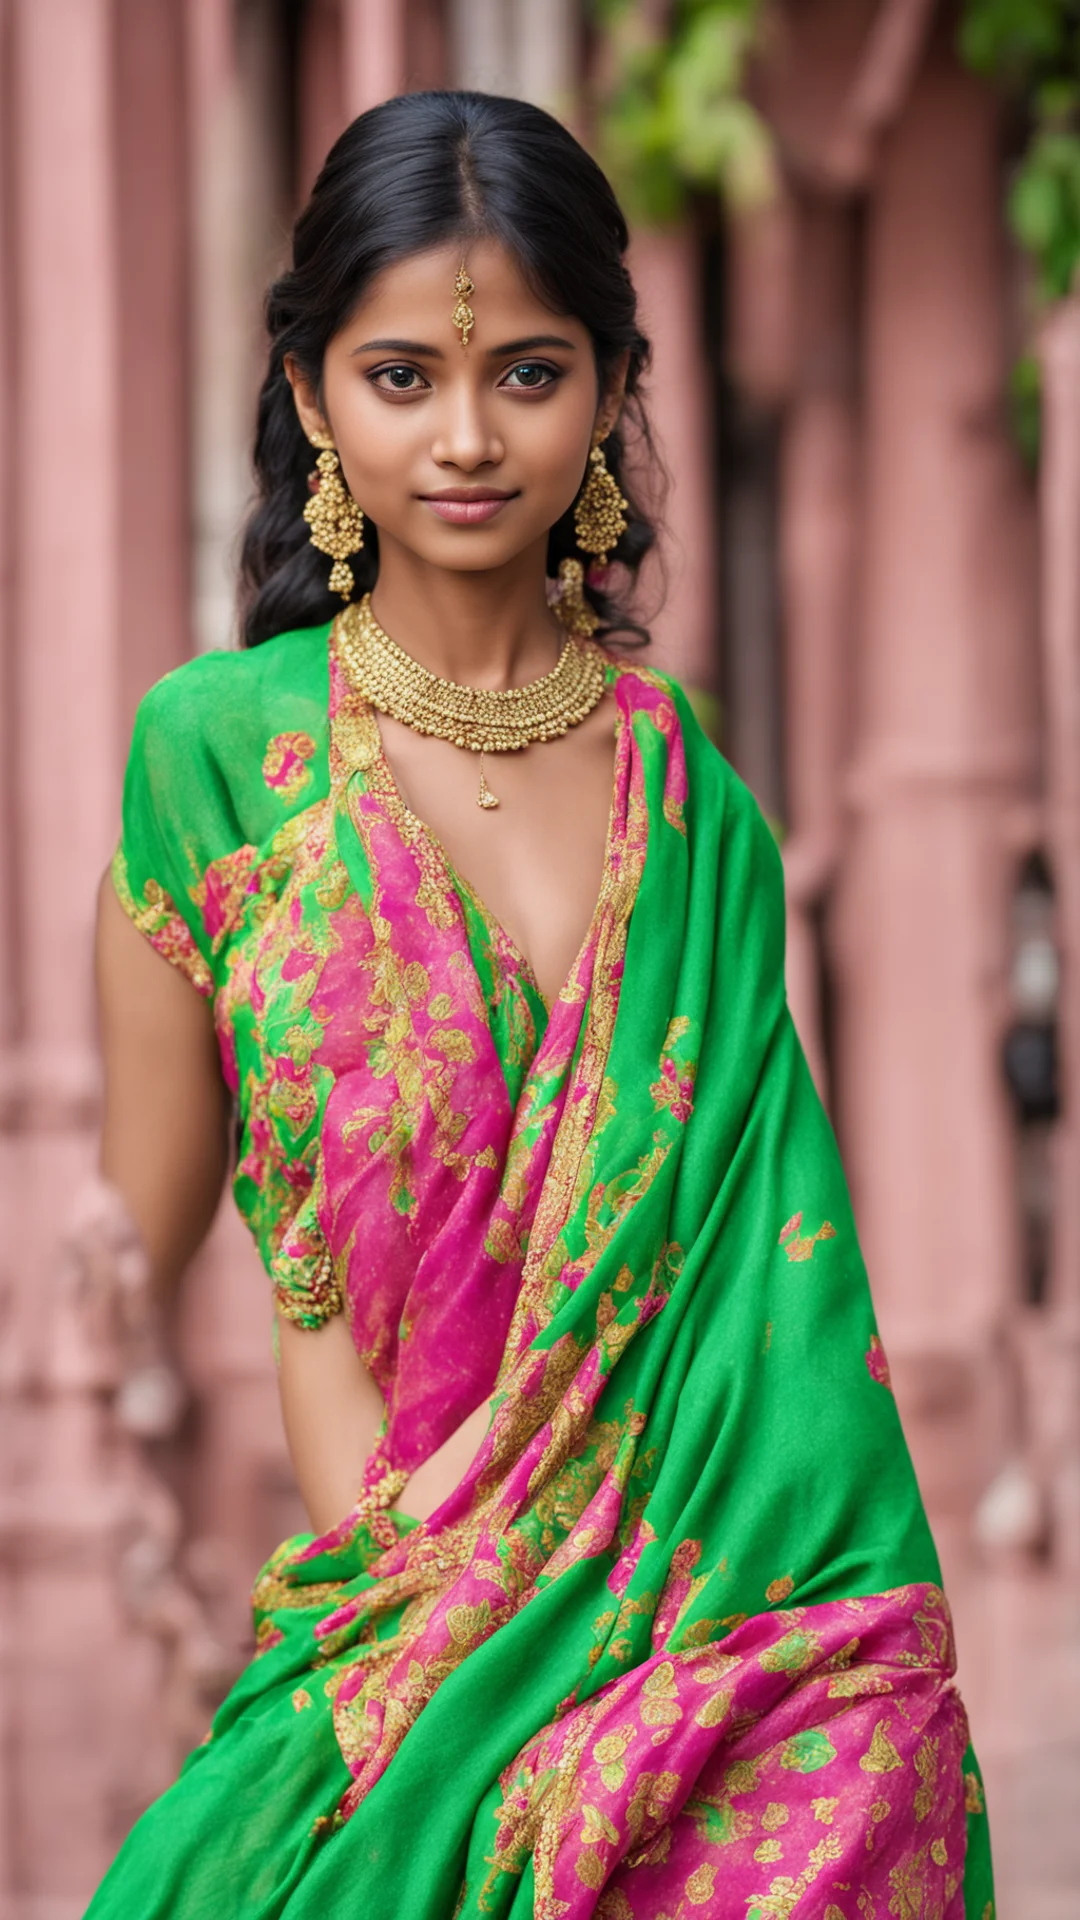 aiindian girl in saree good looking trending fantastic 1 tall